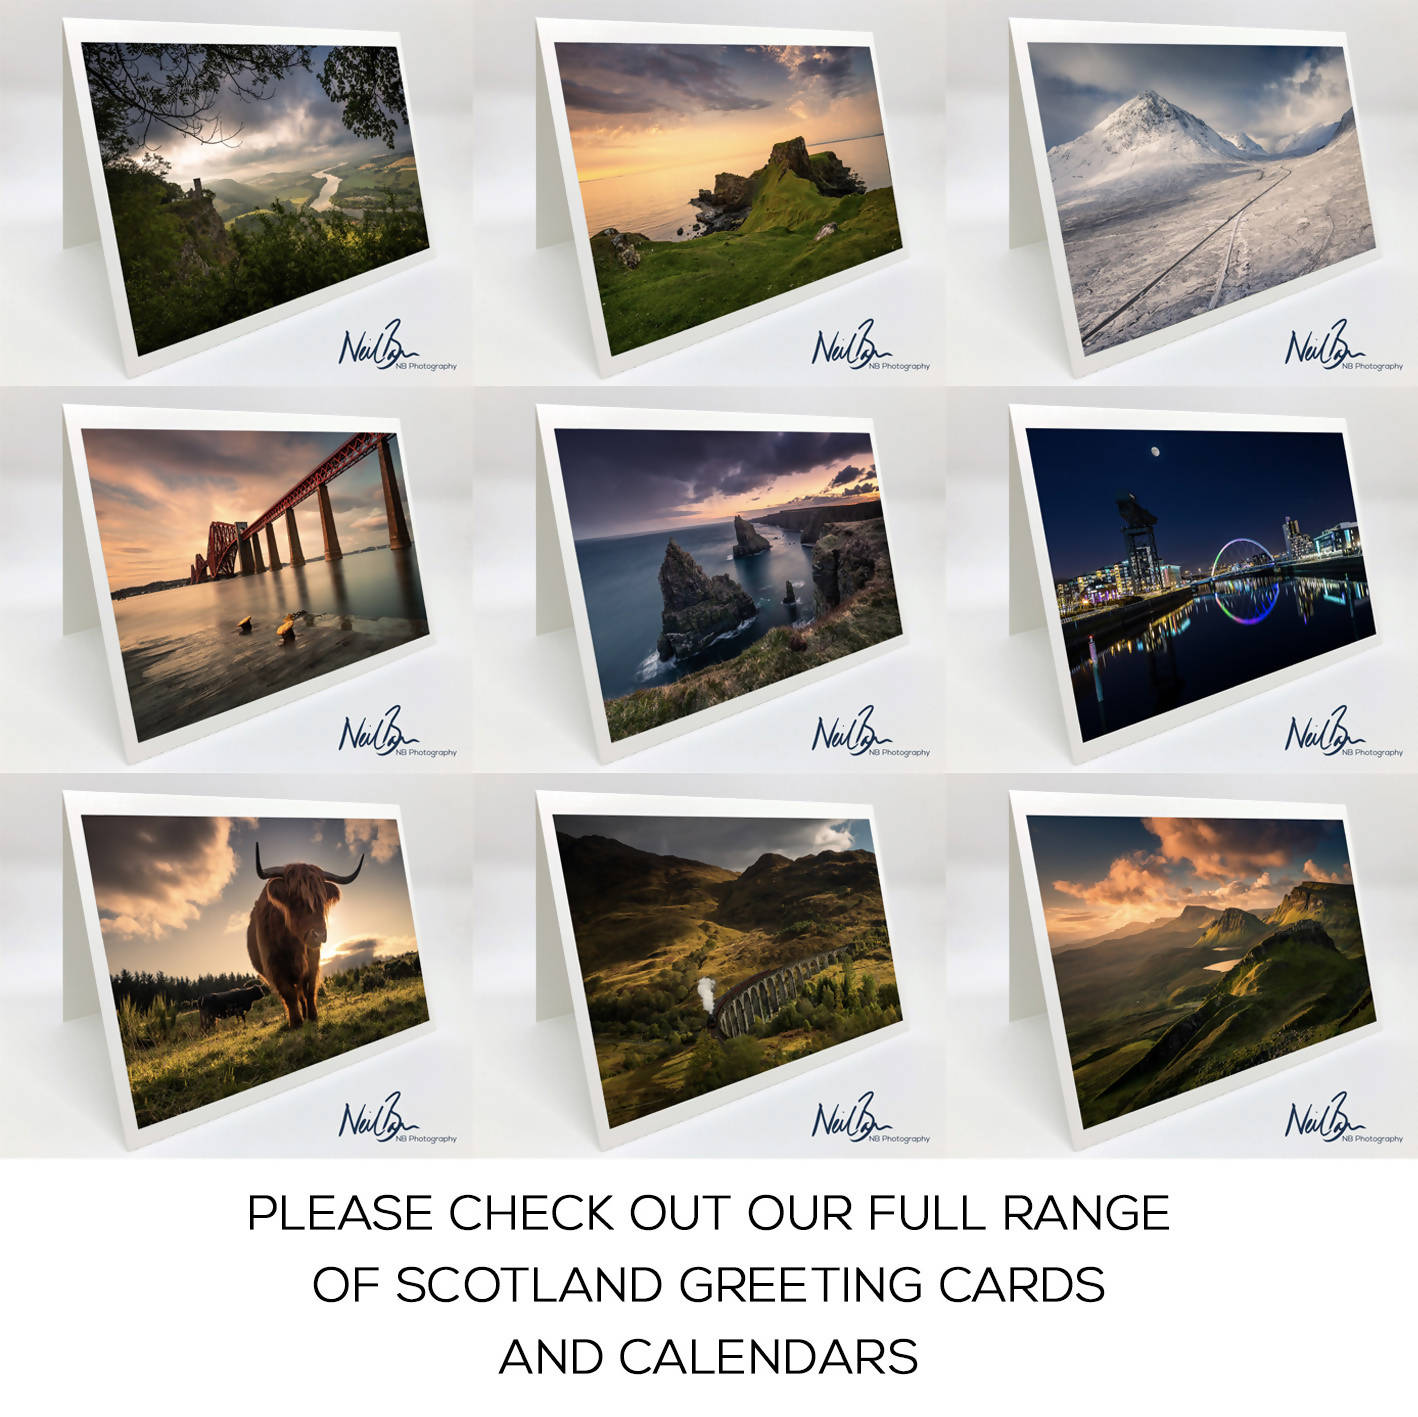 Highland Cow & Calf, Gleniffer Braes - Scotland Greeting Card - Blank Inside